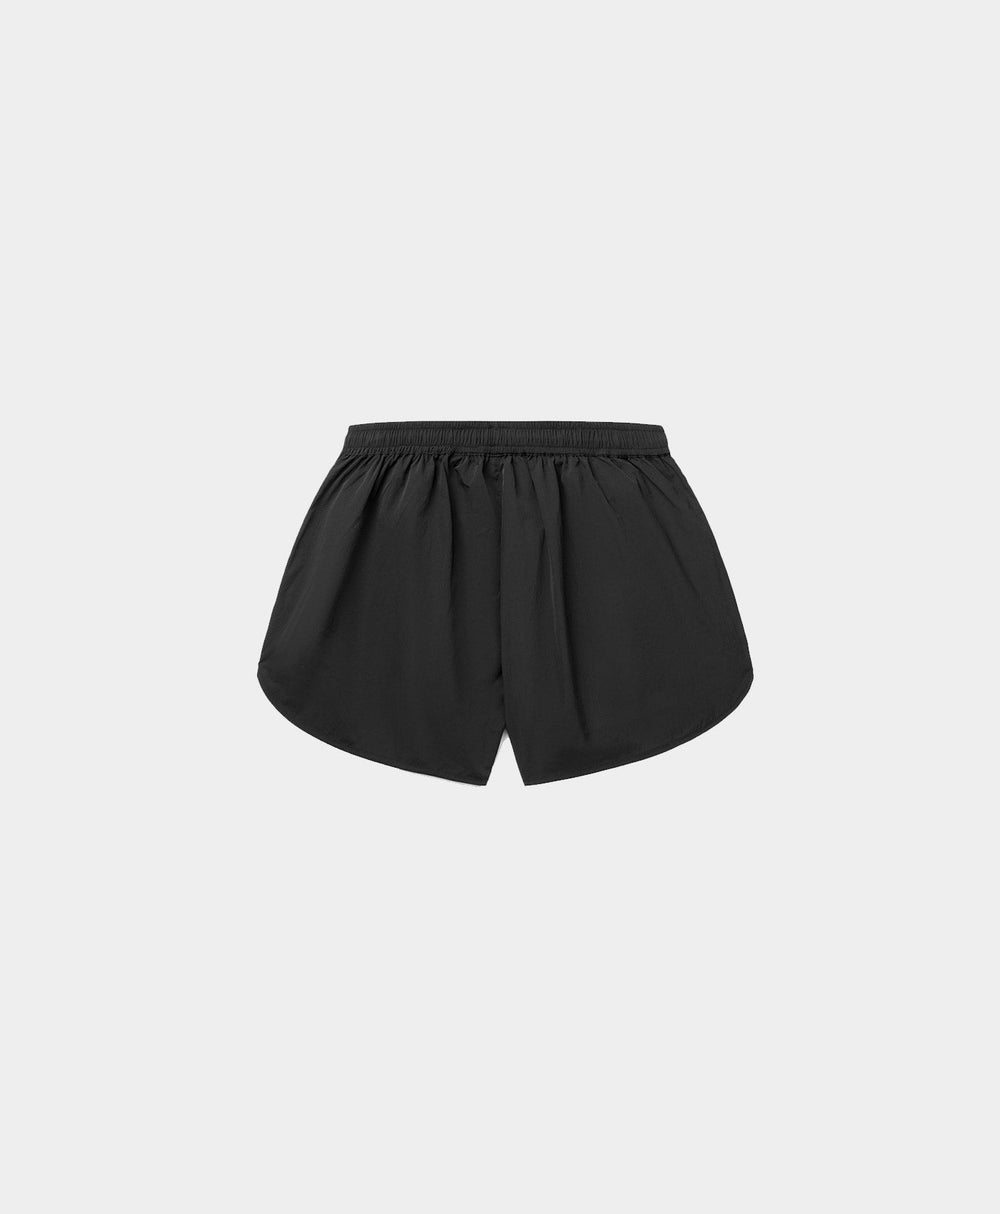 DP - Black Efeah Shorts - Packshot - Rear